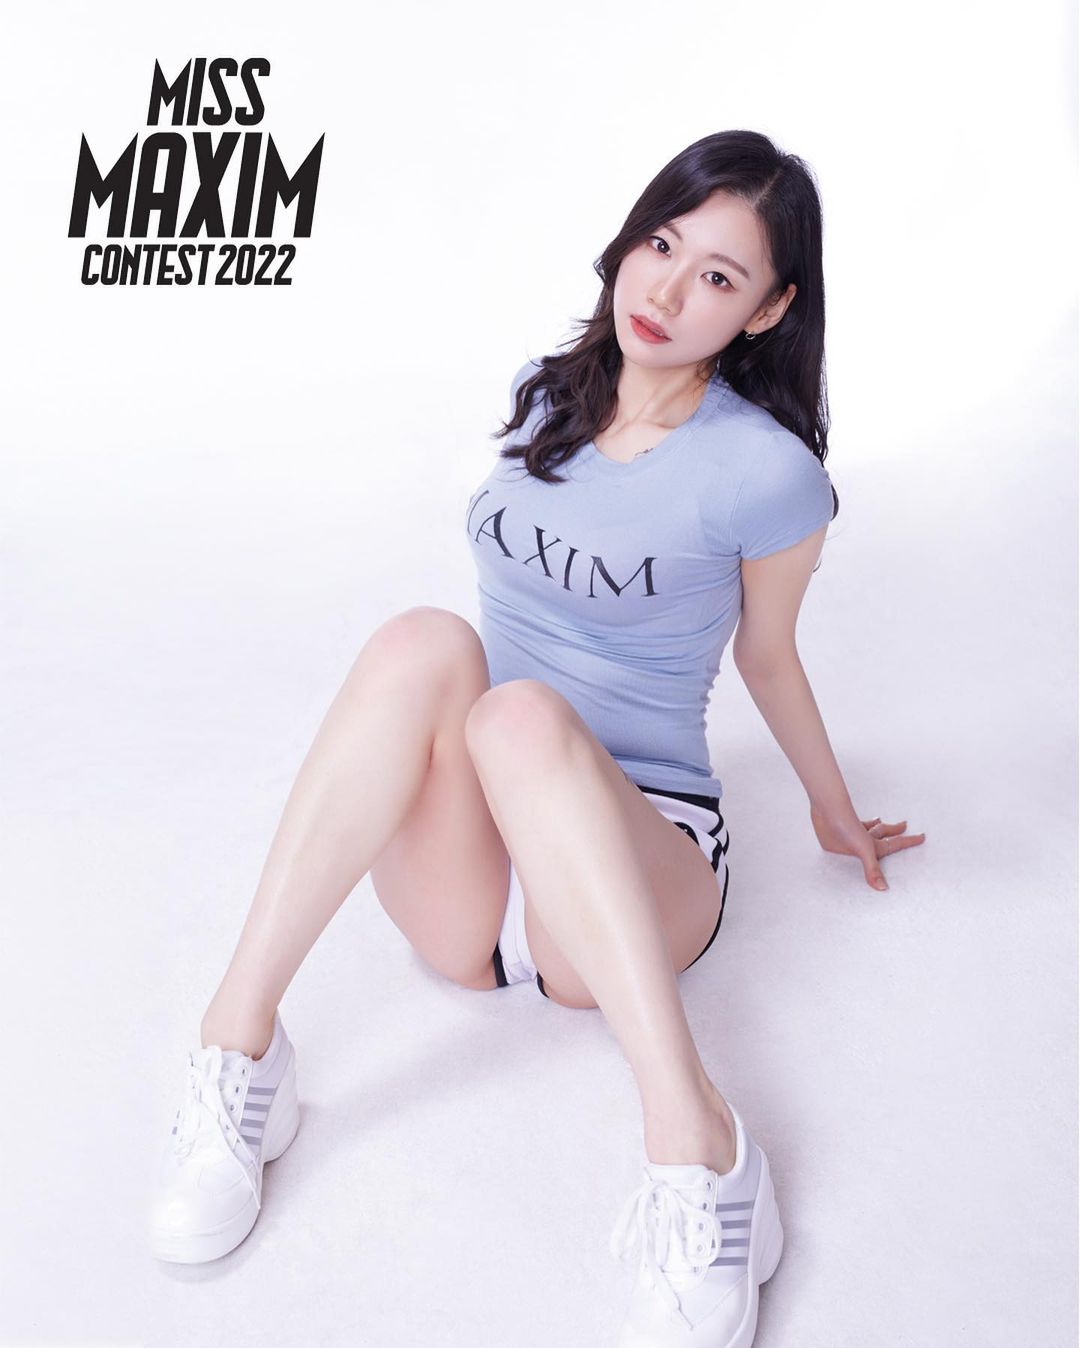 2022 Miss Maxim Candidates